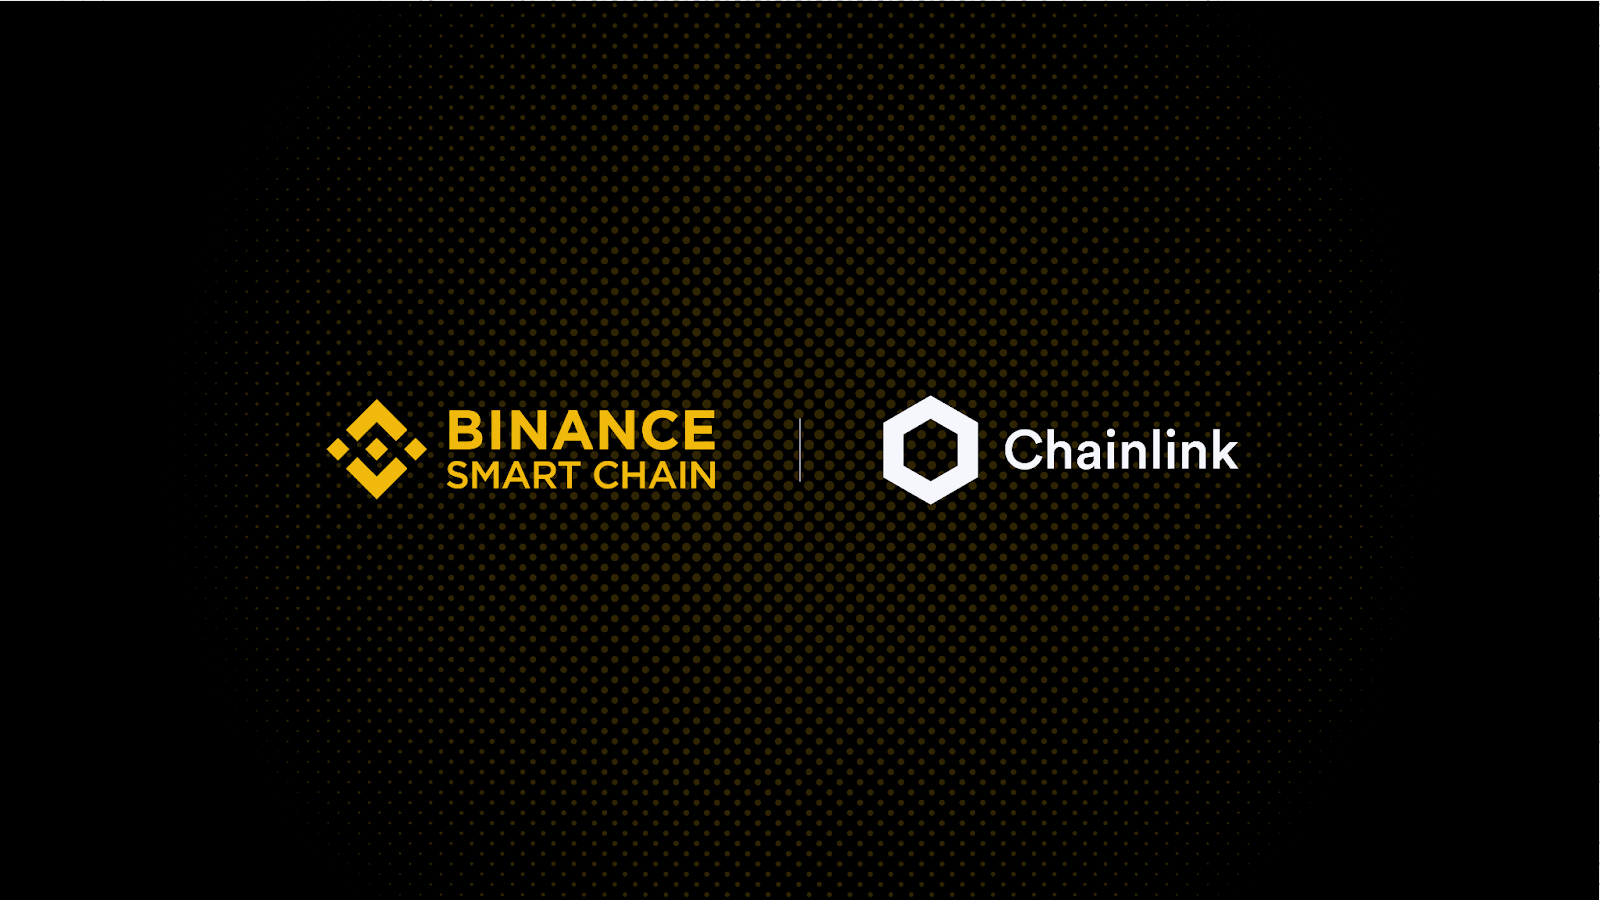 Chainlink VRF is Live on Binance Smart Chain